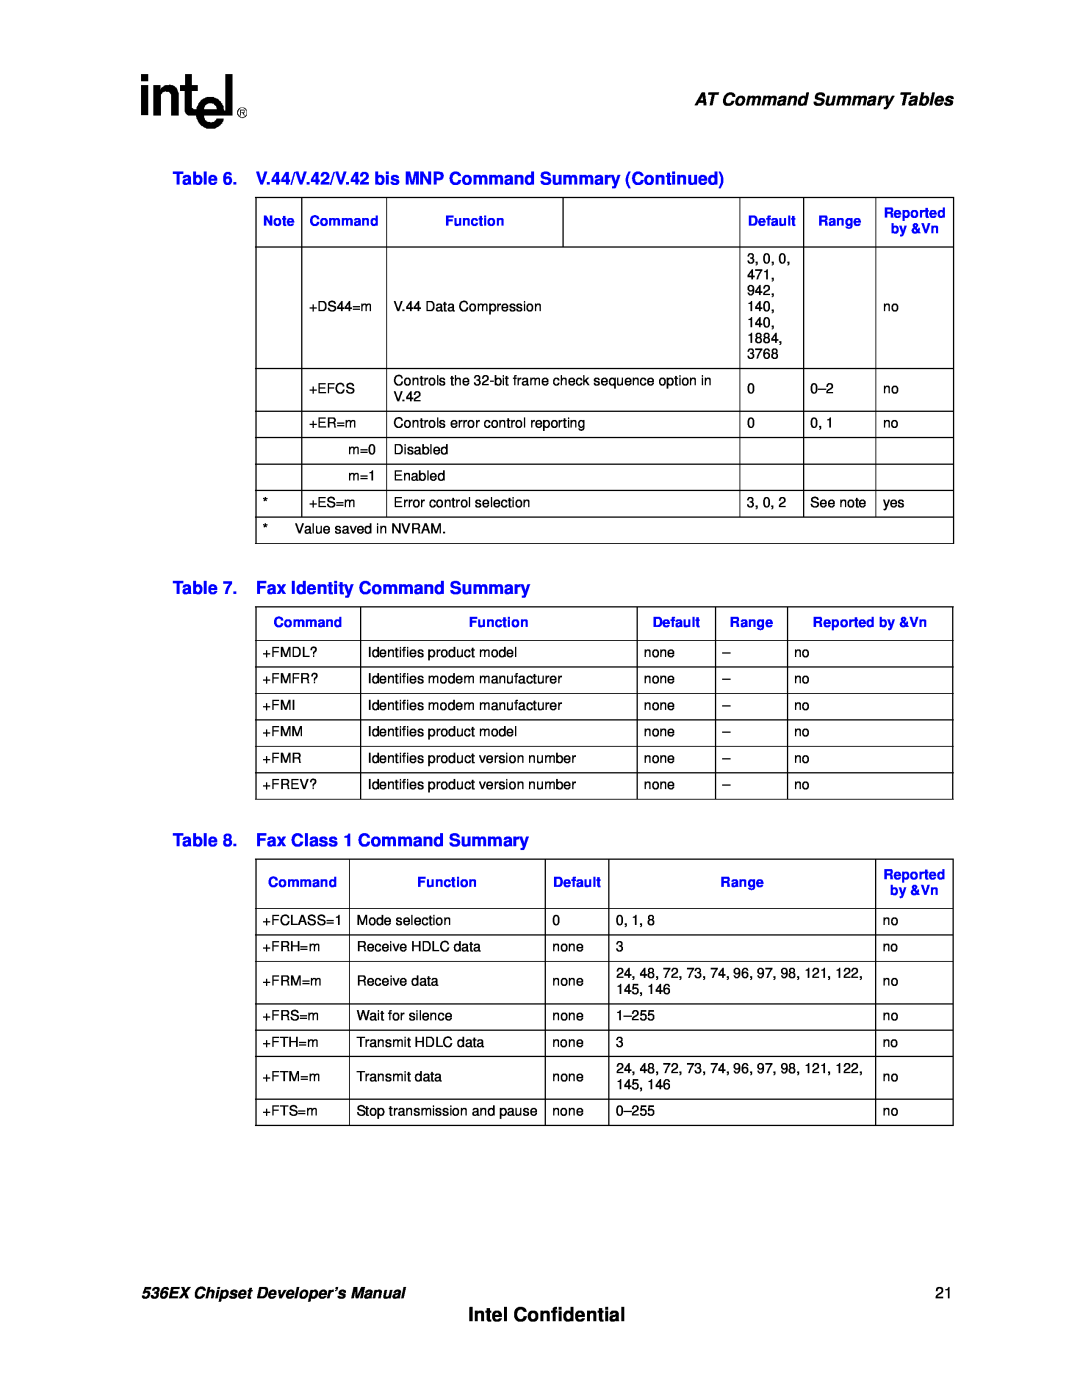 Intel 537EX manual Intel Confidential, AT Command Summary Tables, Fax Identity Command Summary, Fax Class 1 Command Summary 